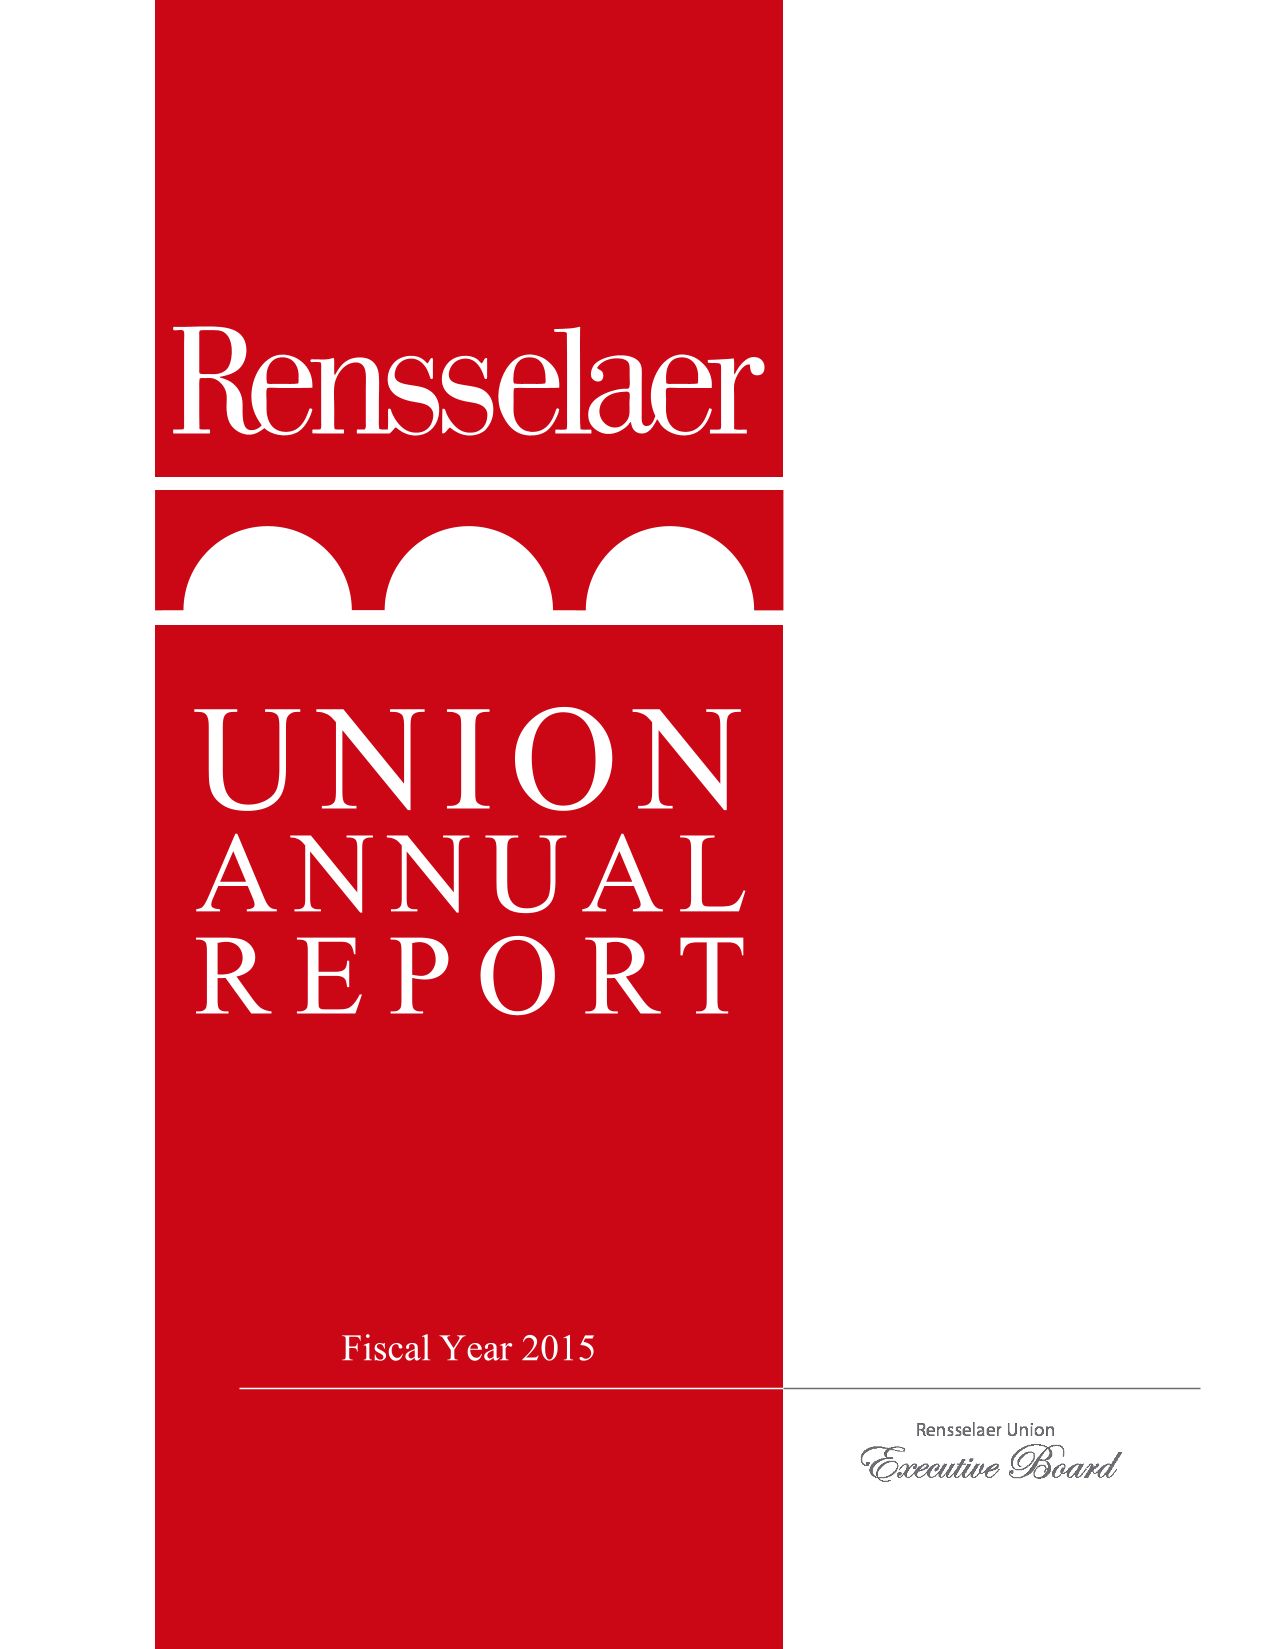 Rensselaer Union Annual Report 2015